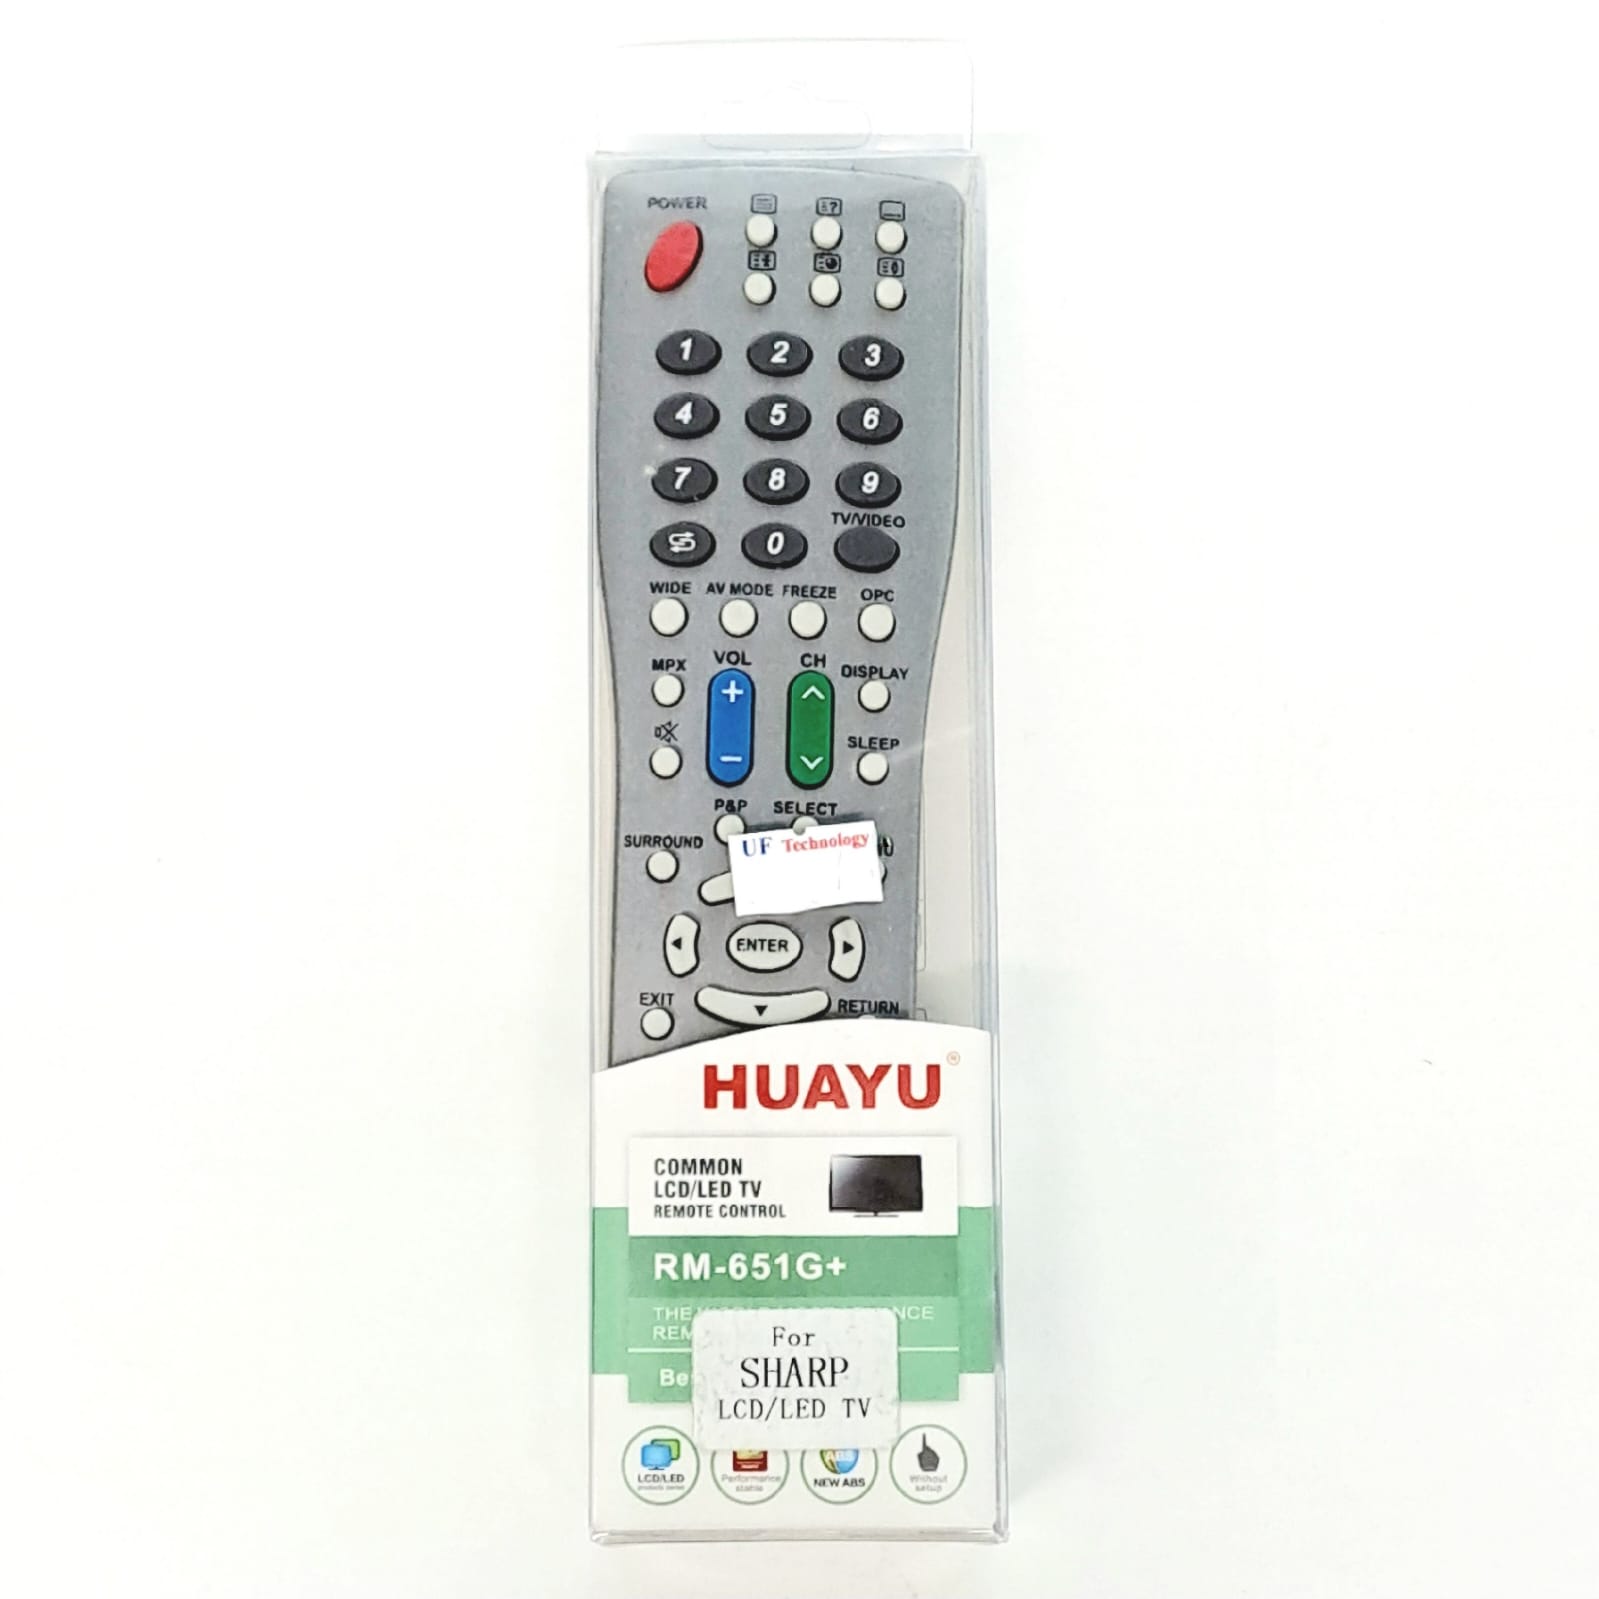 HUAYU RM-651G+ Universal Remote Control for Sharp TVs